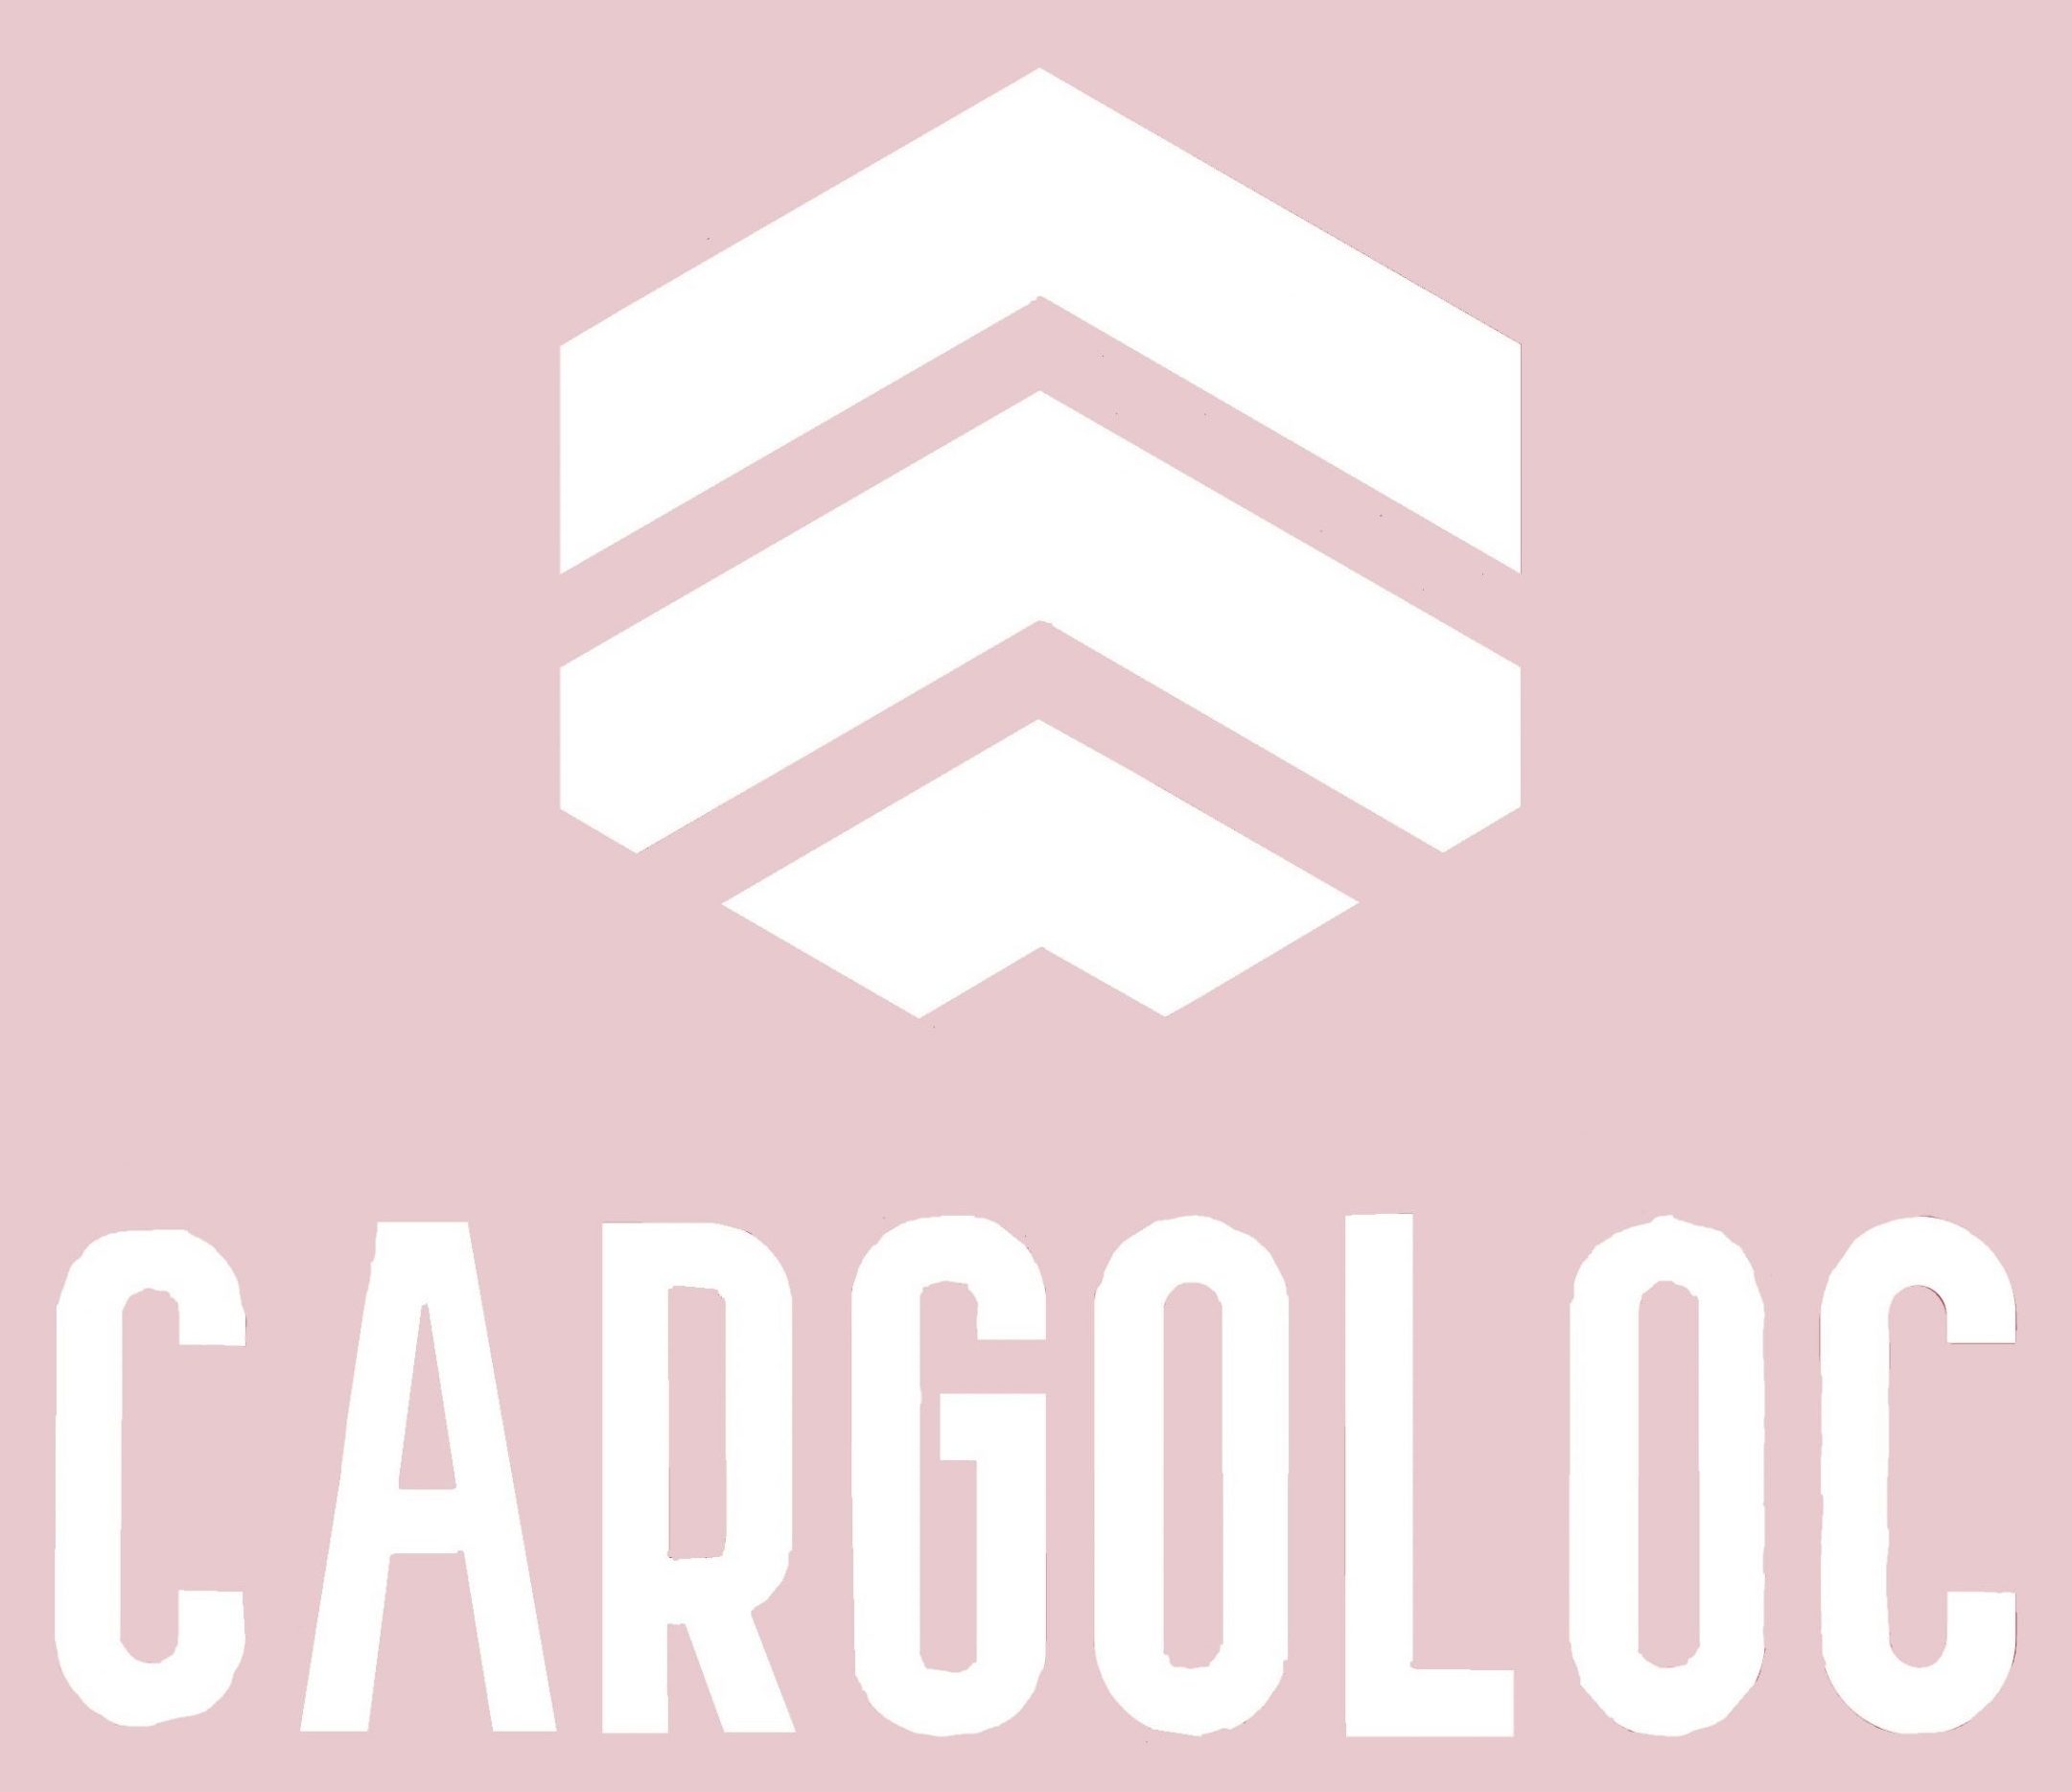 Share par Cargoloc